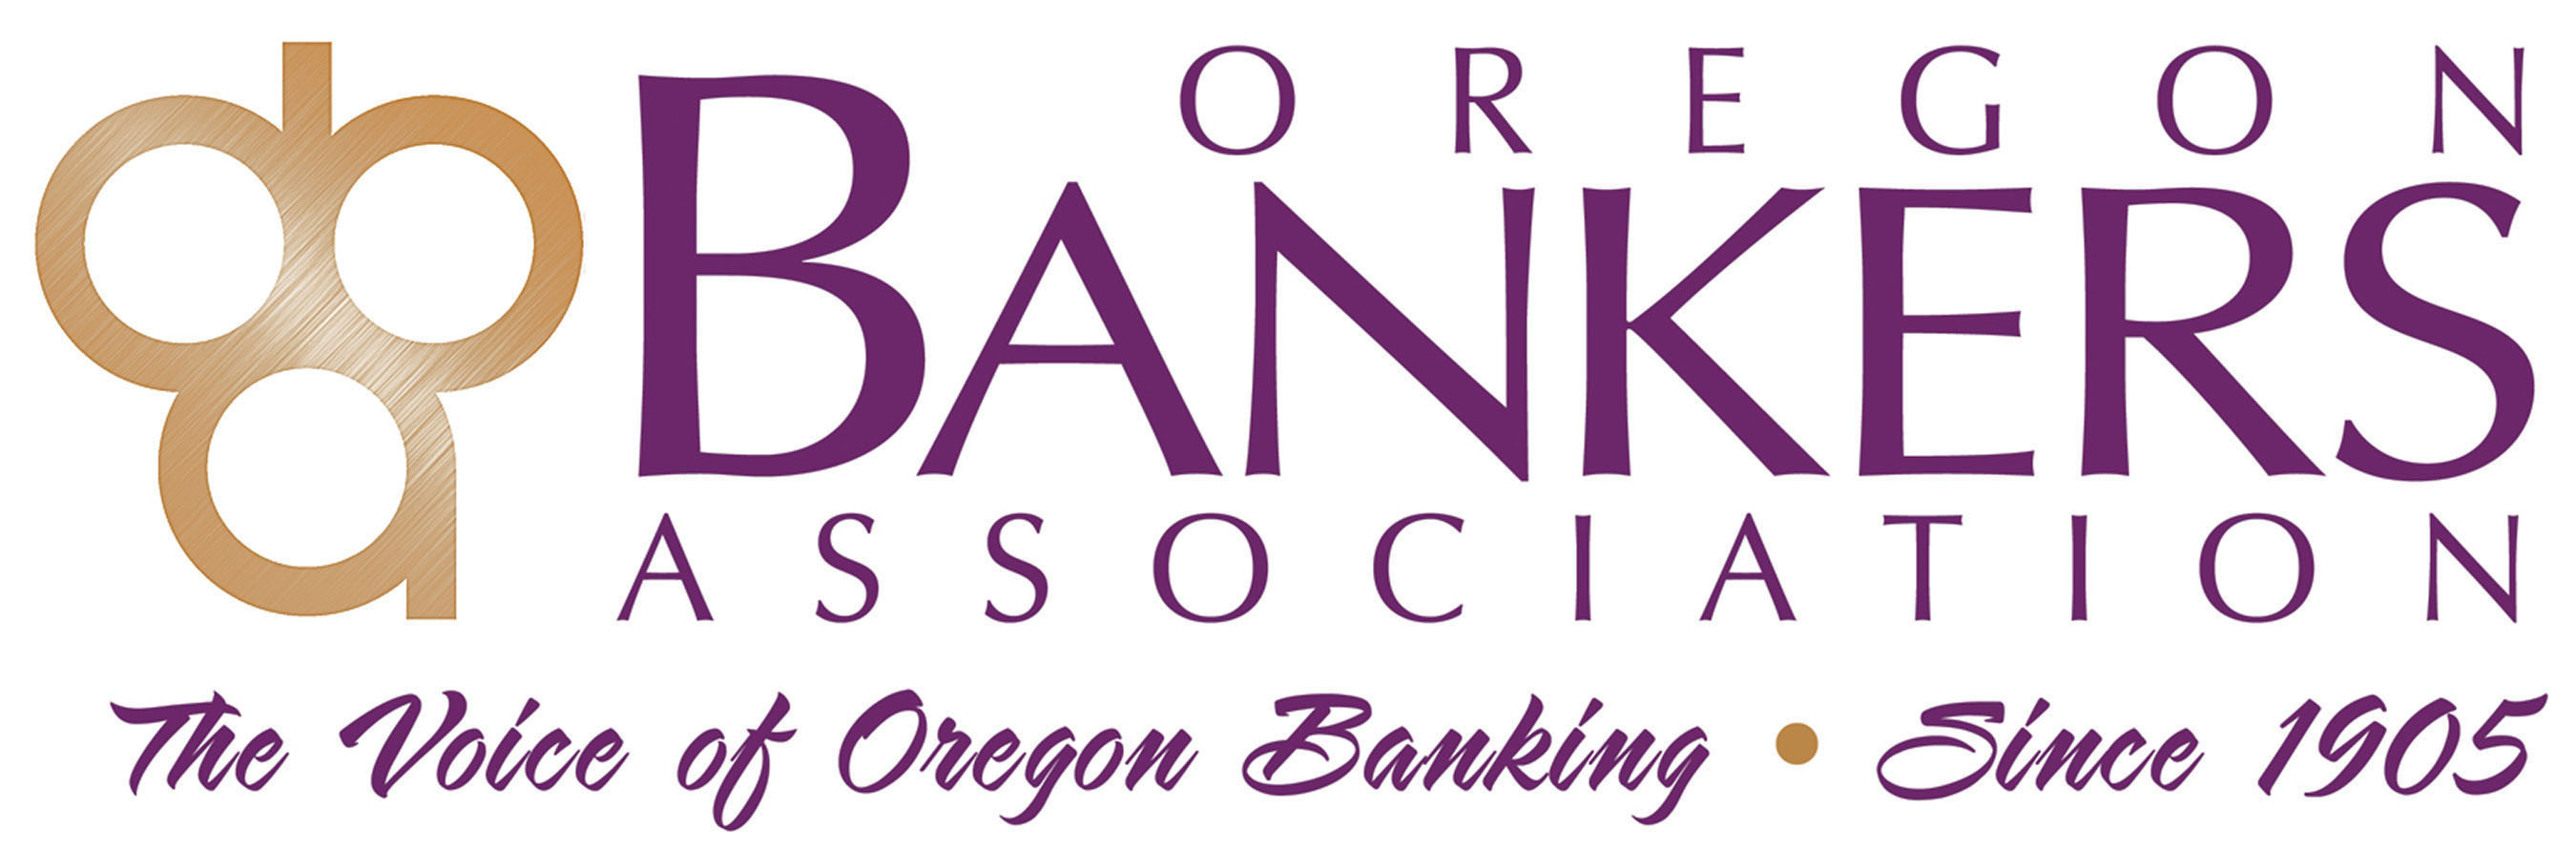 Oregon Bankers Association Logo. (PRNewsFoto/Oregon Bankers Association) (PRNewsFoto/)